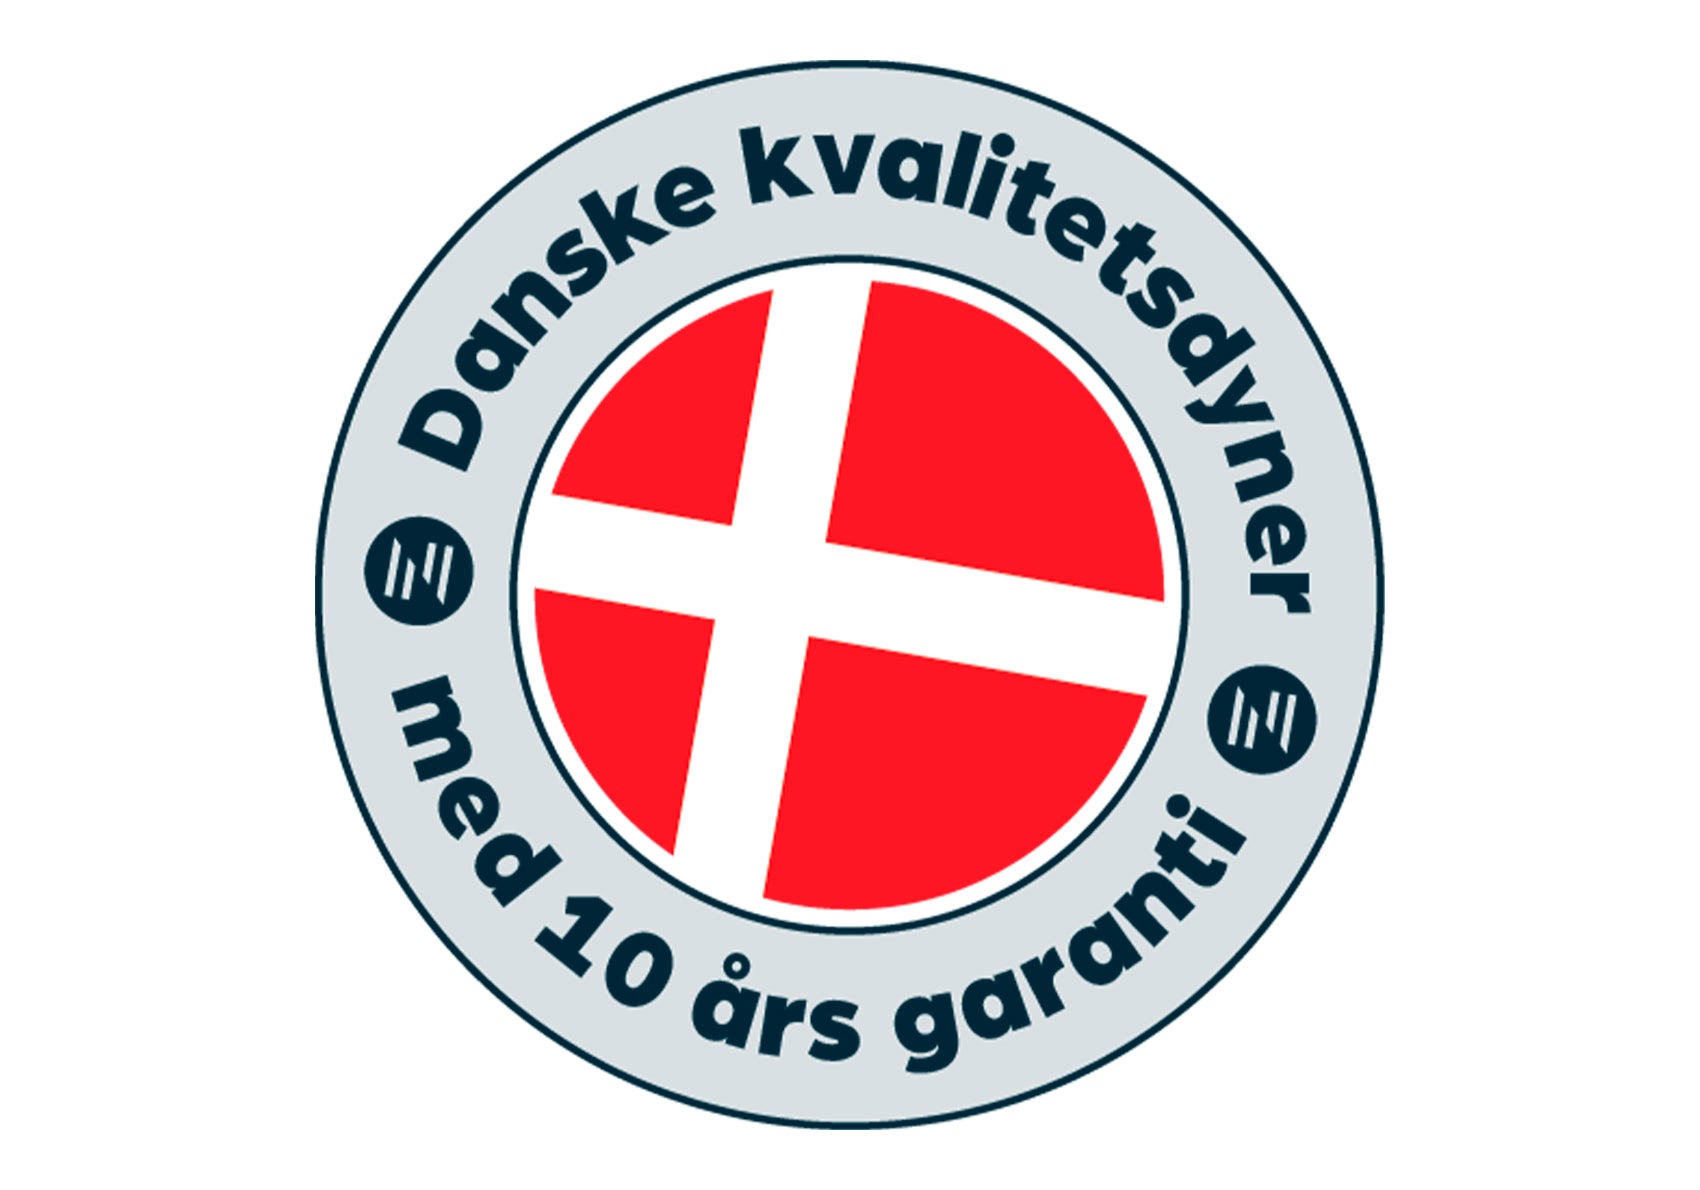 Emblem for 10 års garanti på dyner fra Quilts of Denmark